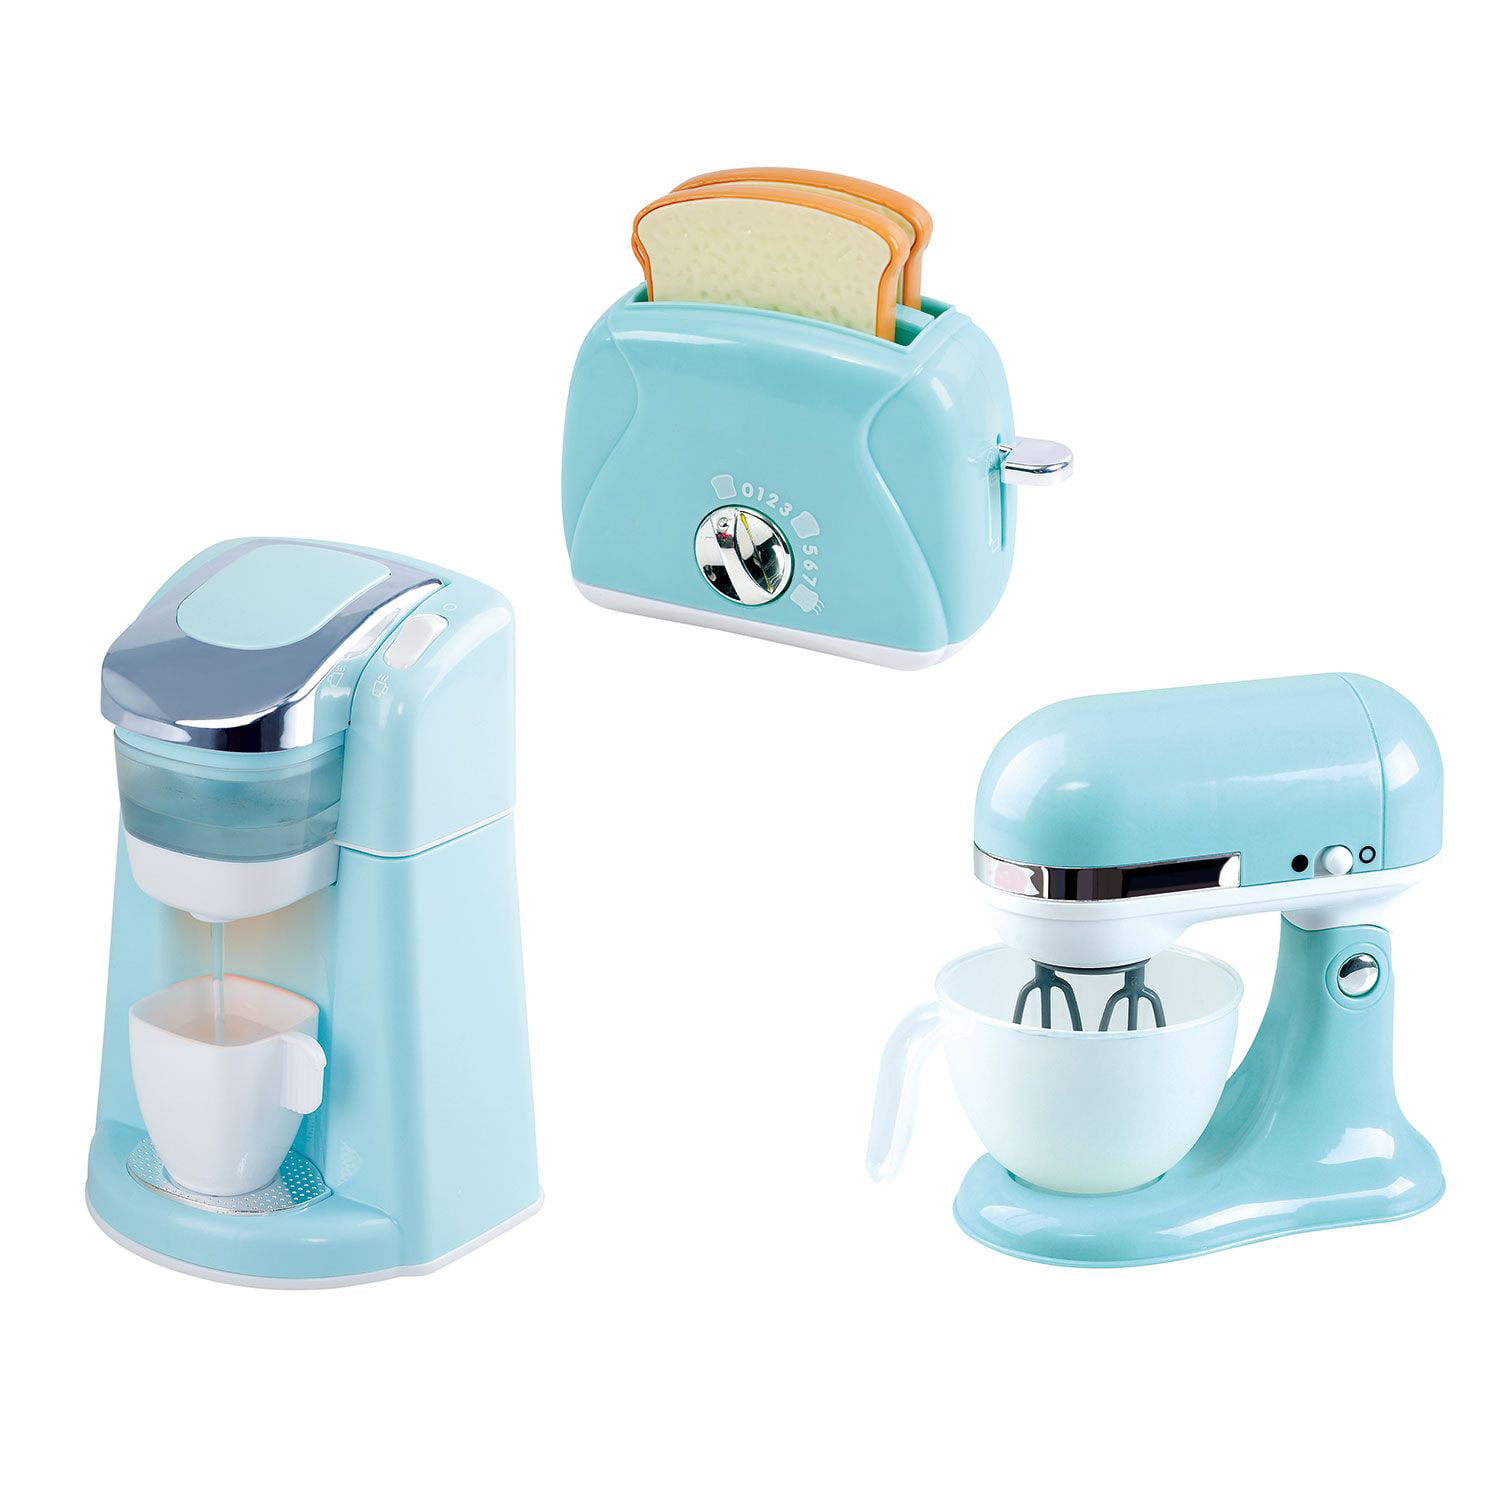 Playgo TEAL Gourmet Kitchen Appliances 3 pc set Coffee Maker Mixer Blender 